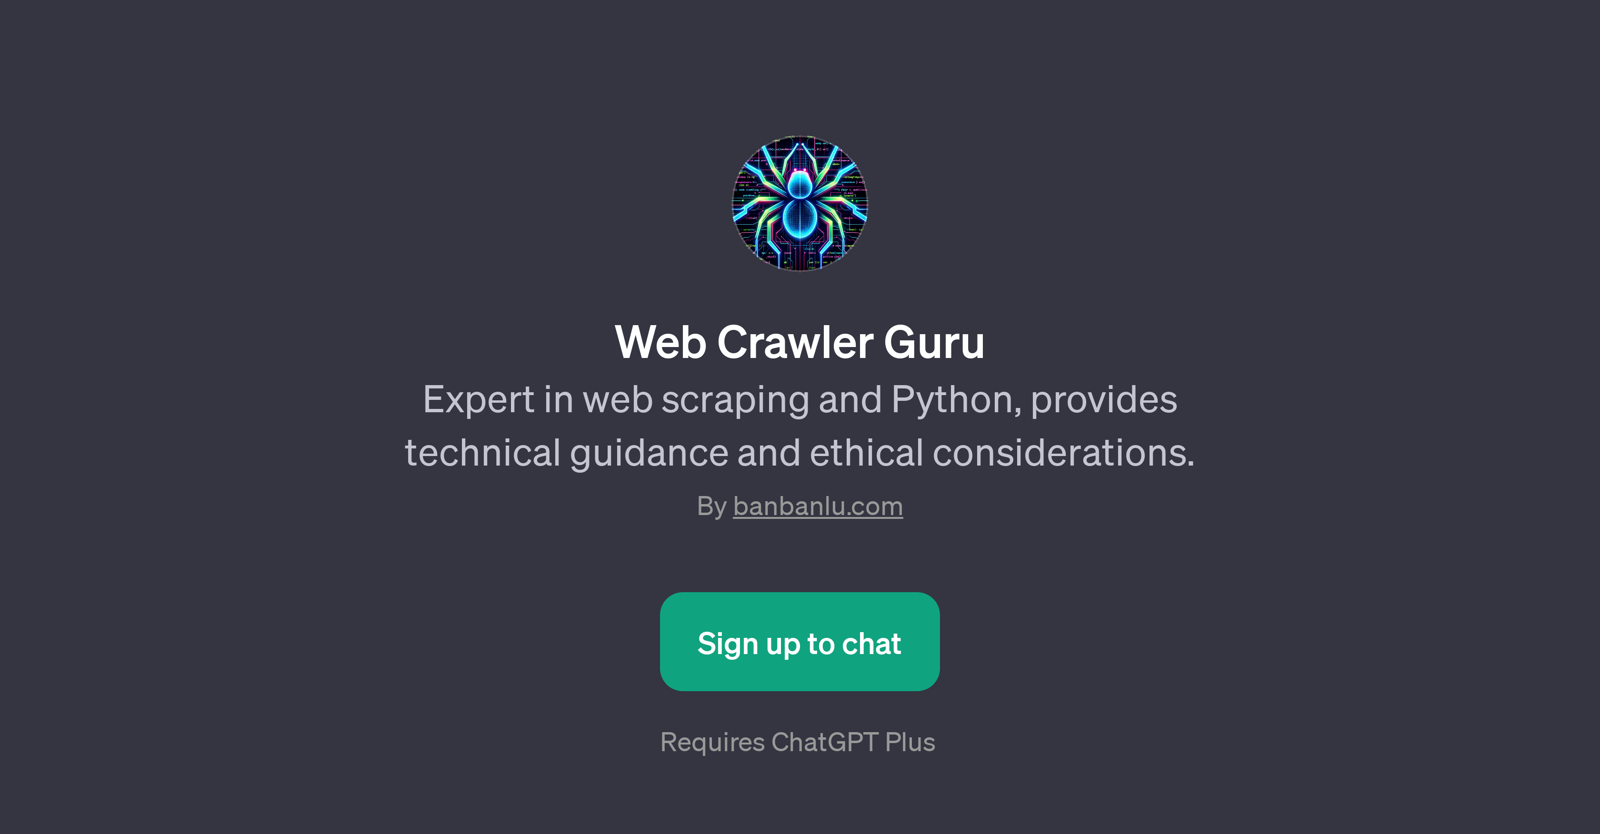 Web Crawler Guru website